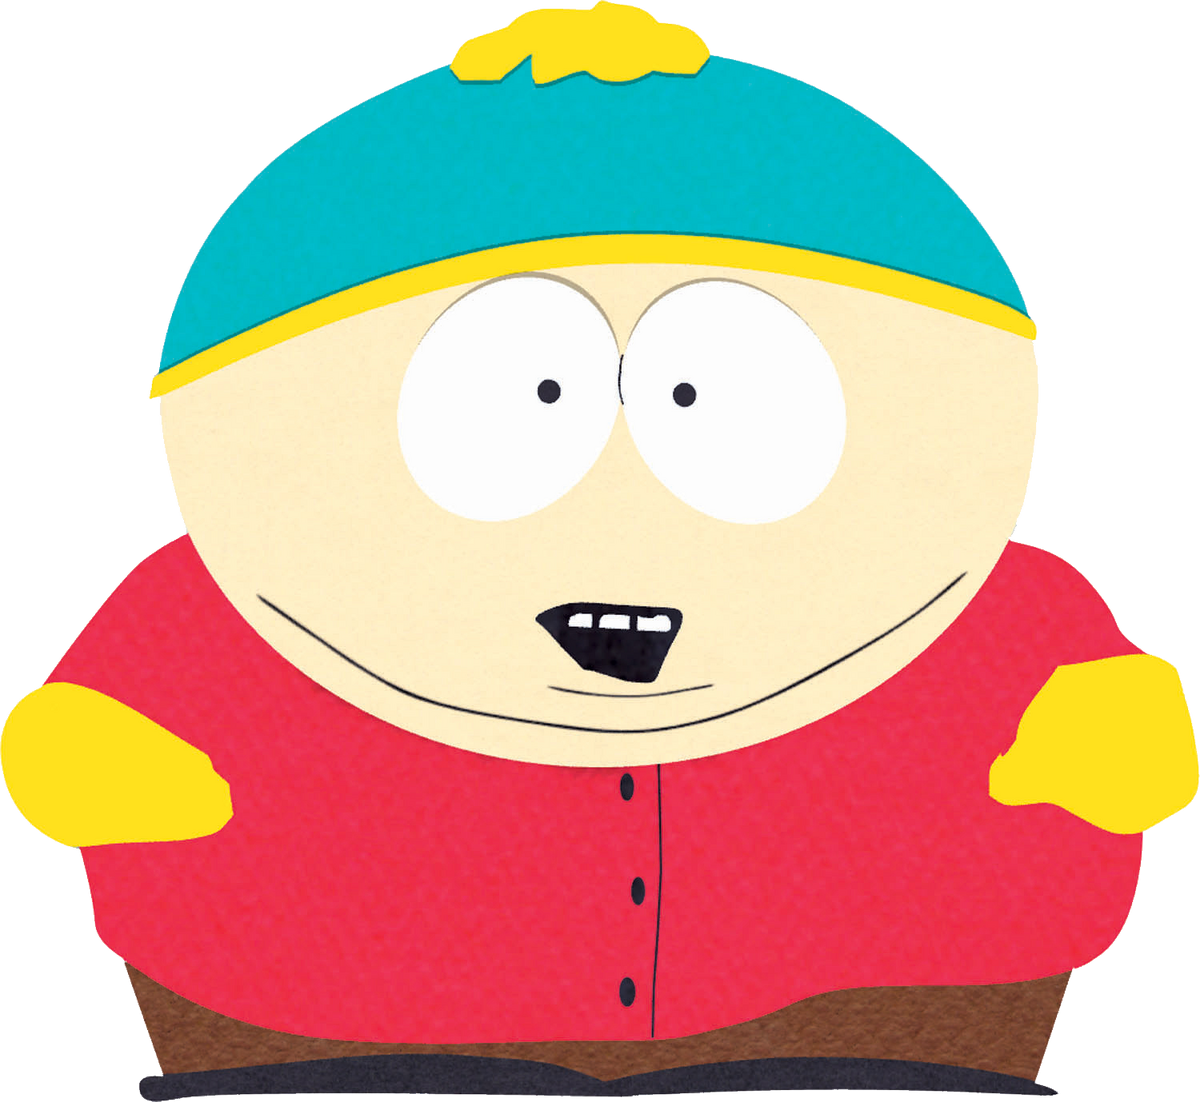 Eric Cartman The South Park Wiki Fandom